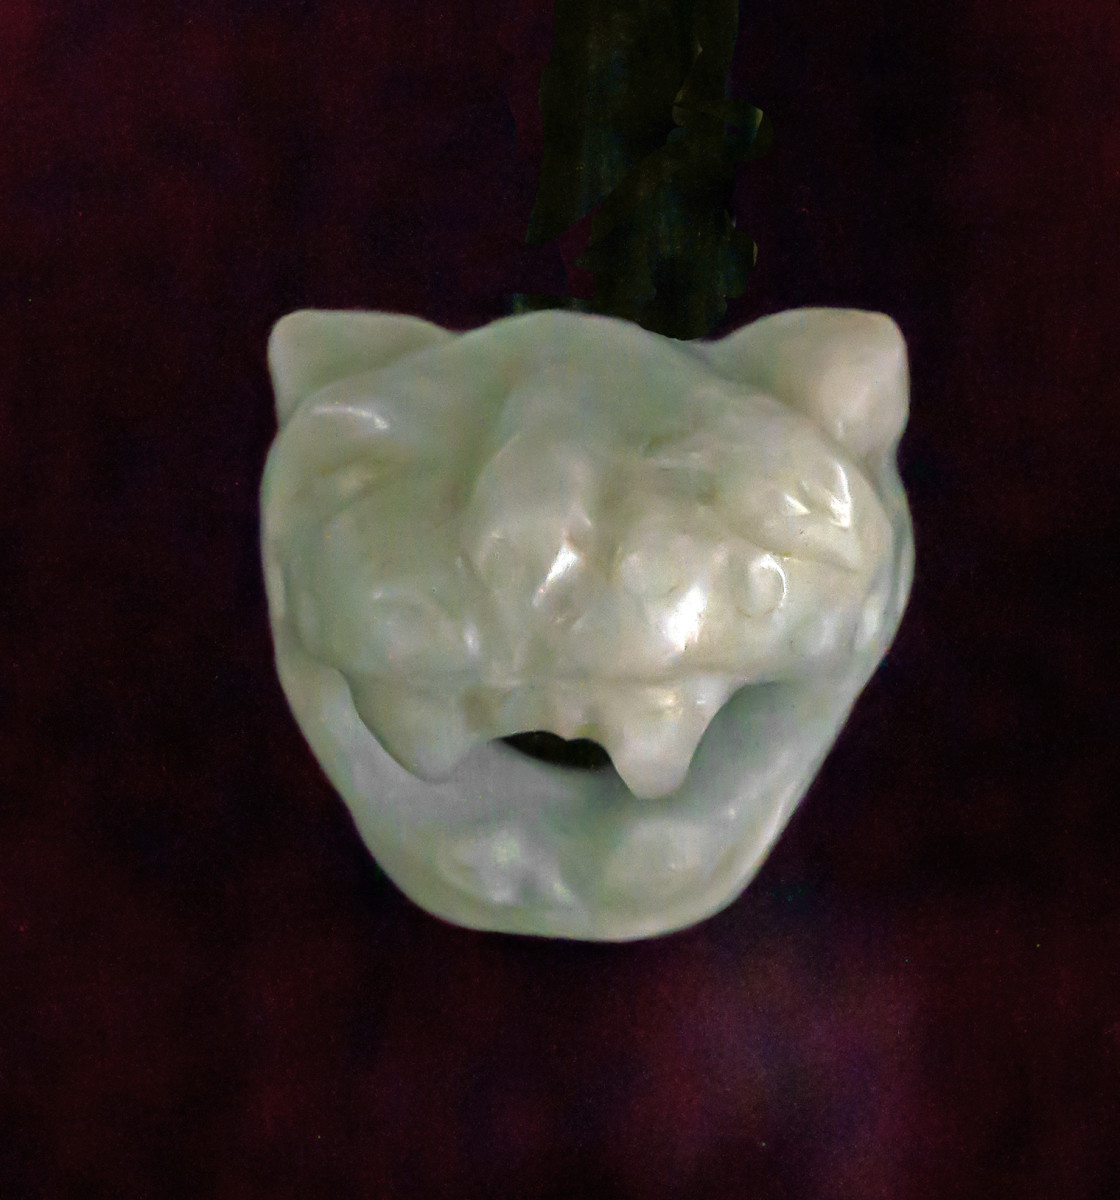 Small jadeite amulet with jaguar motif.